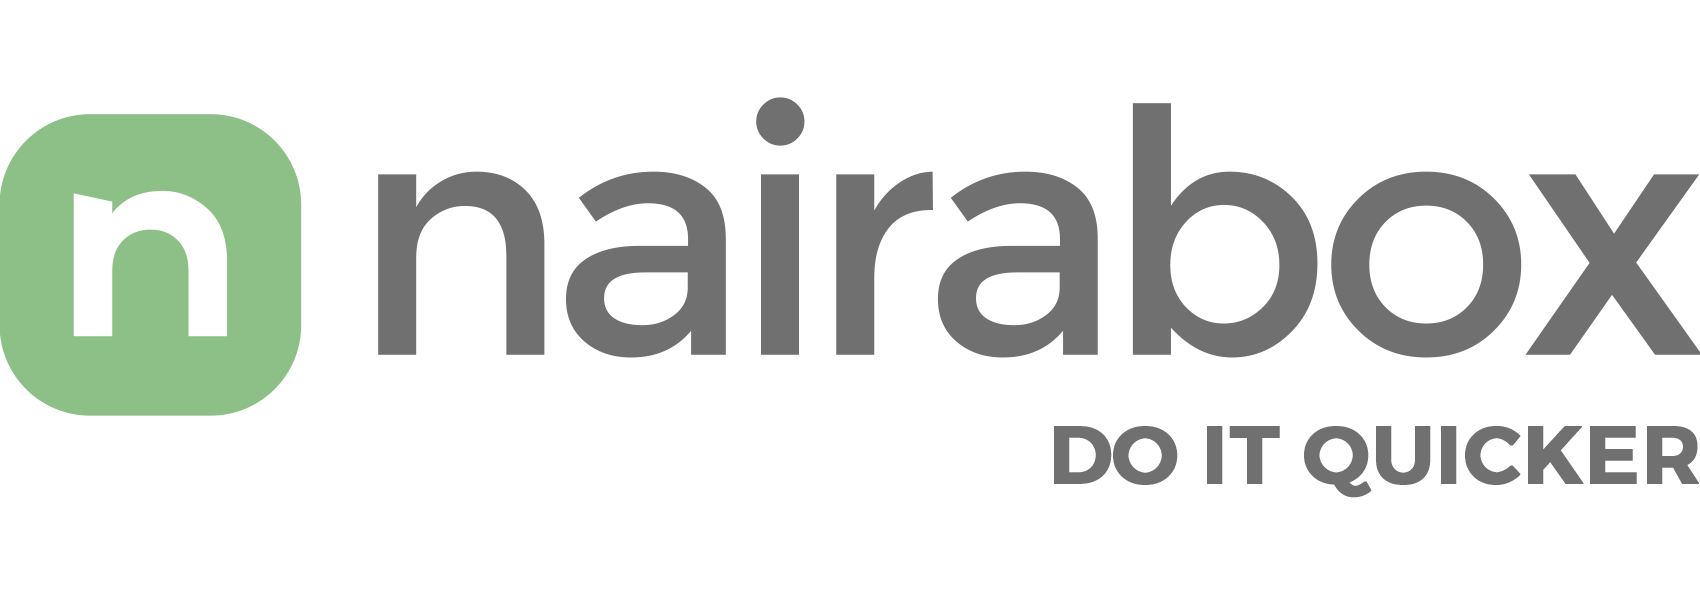 Nairabox Logo